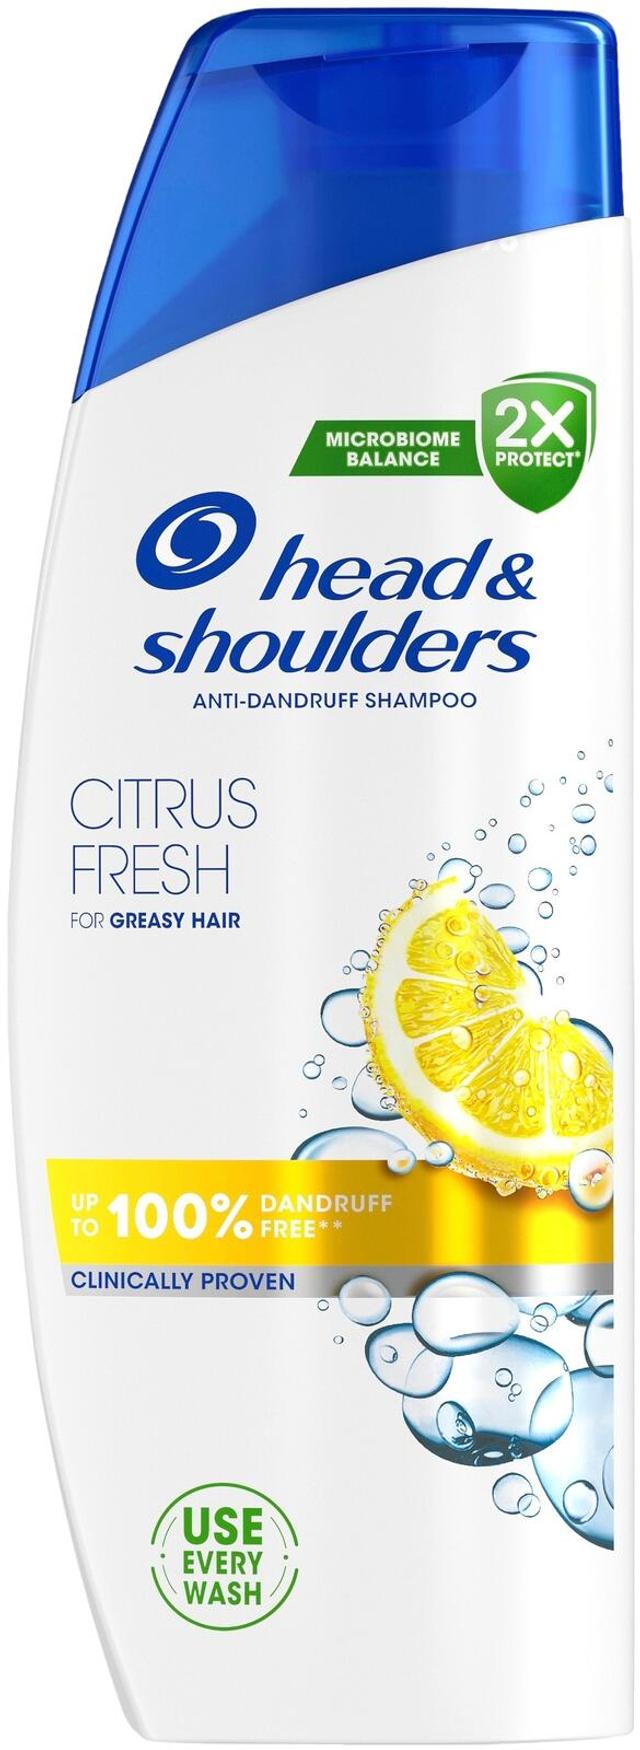 head&shoulders Citrus Fresh 250ml shampoo